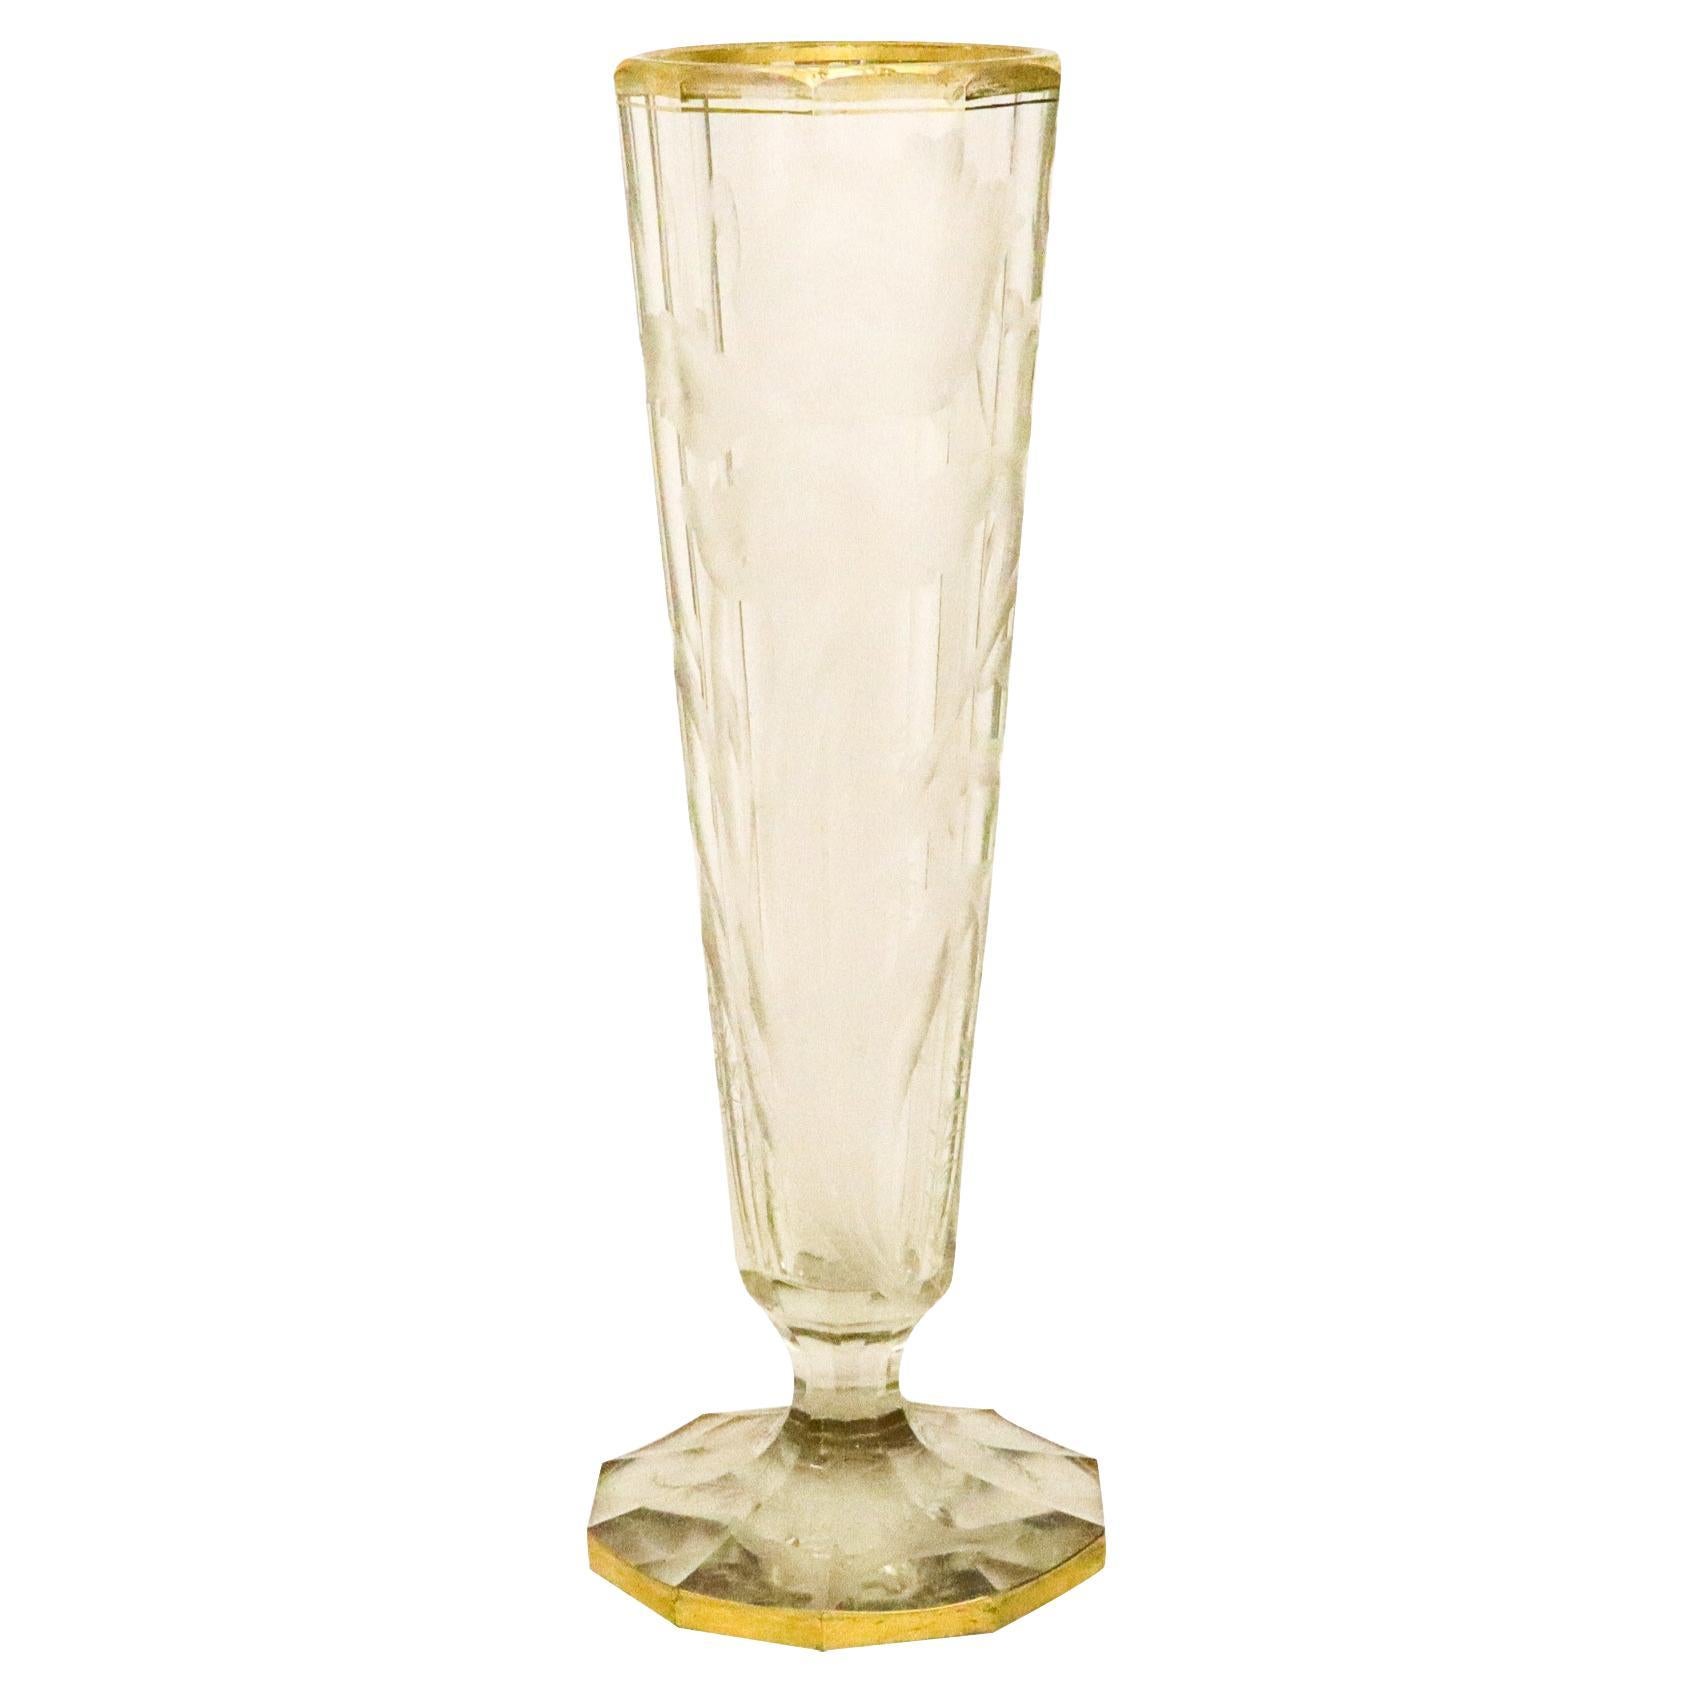 Moser 1900 Czech Bohemian Art Nouveau Tall Etched Glass Vase with 24kt Gilding